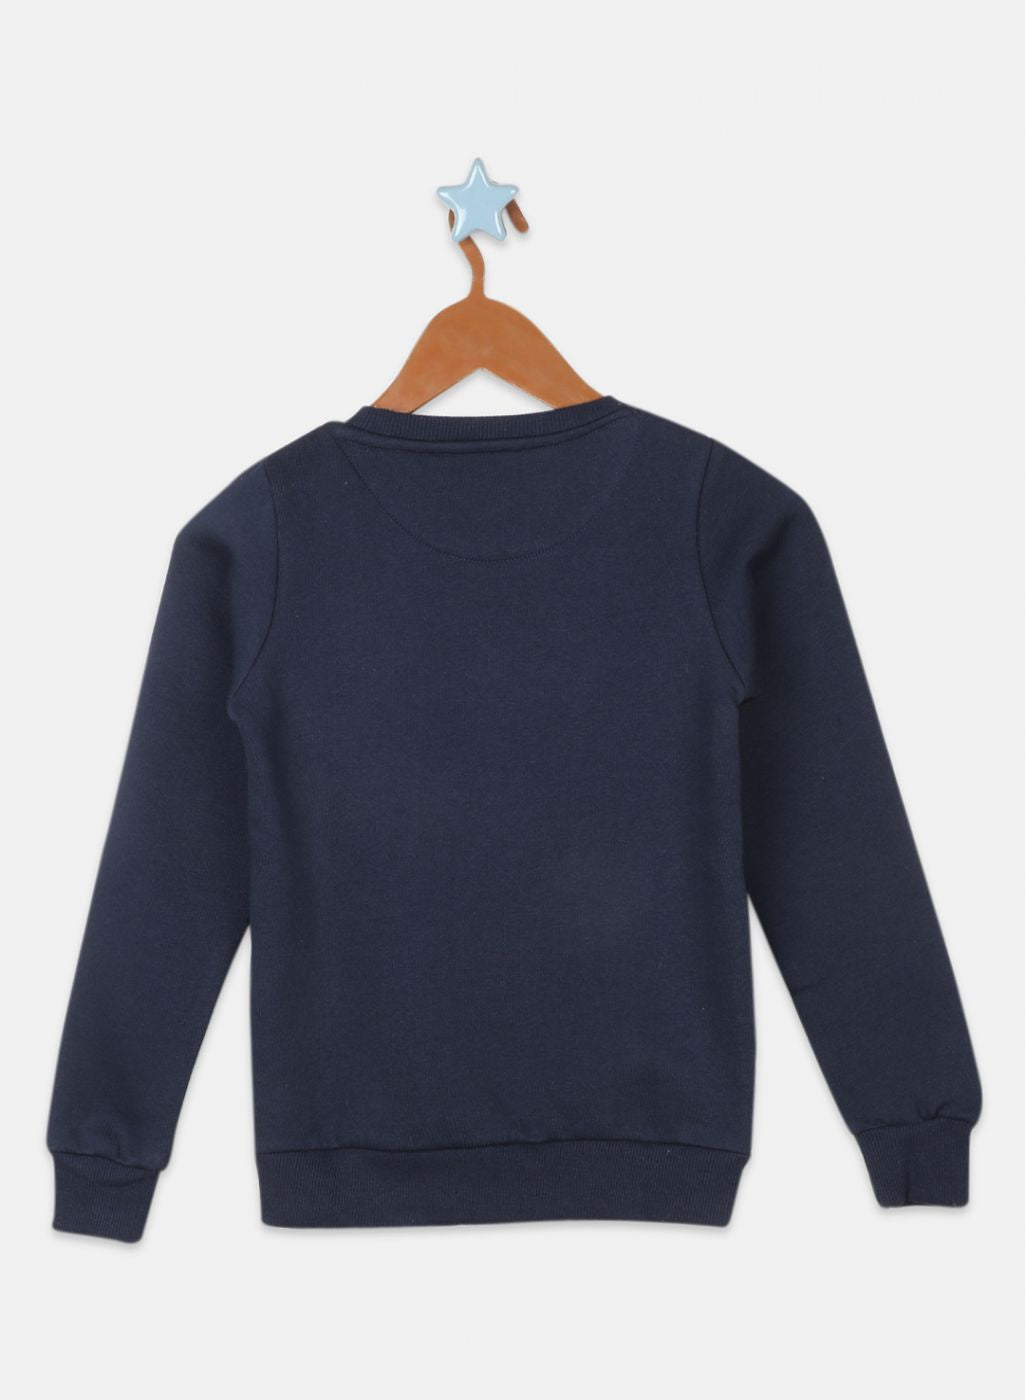 Girls NAvy Blue Printed Sweatshirt